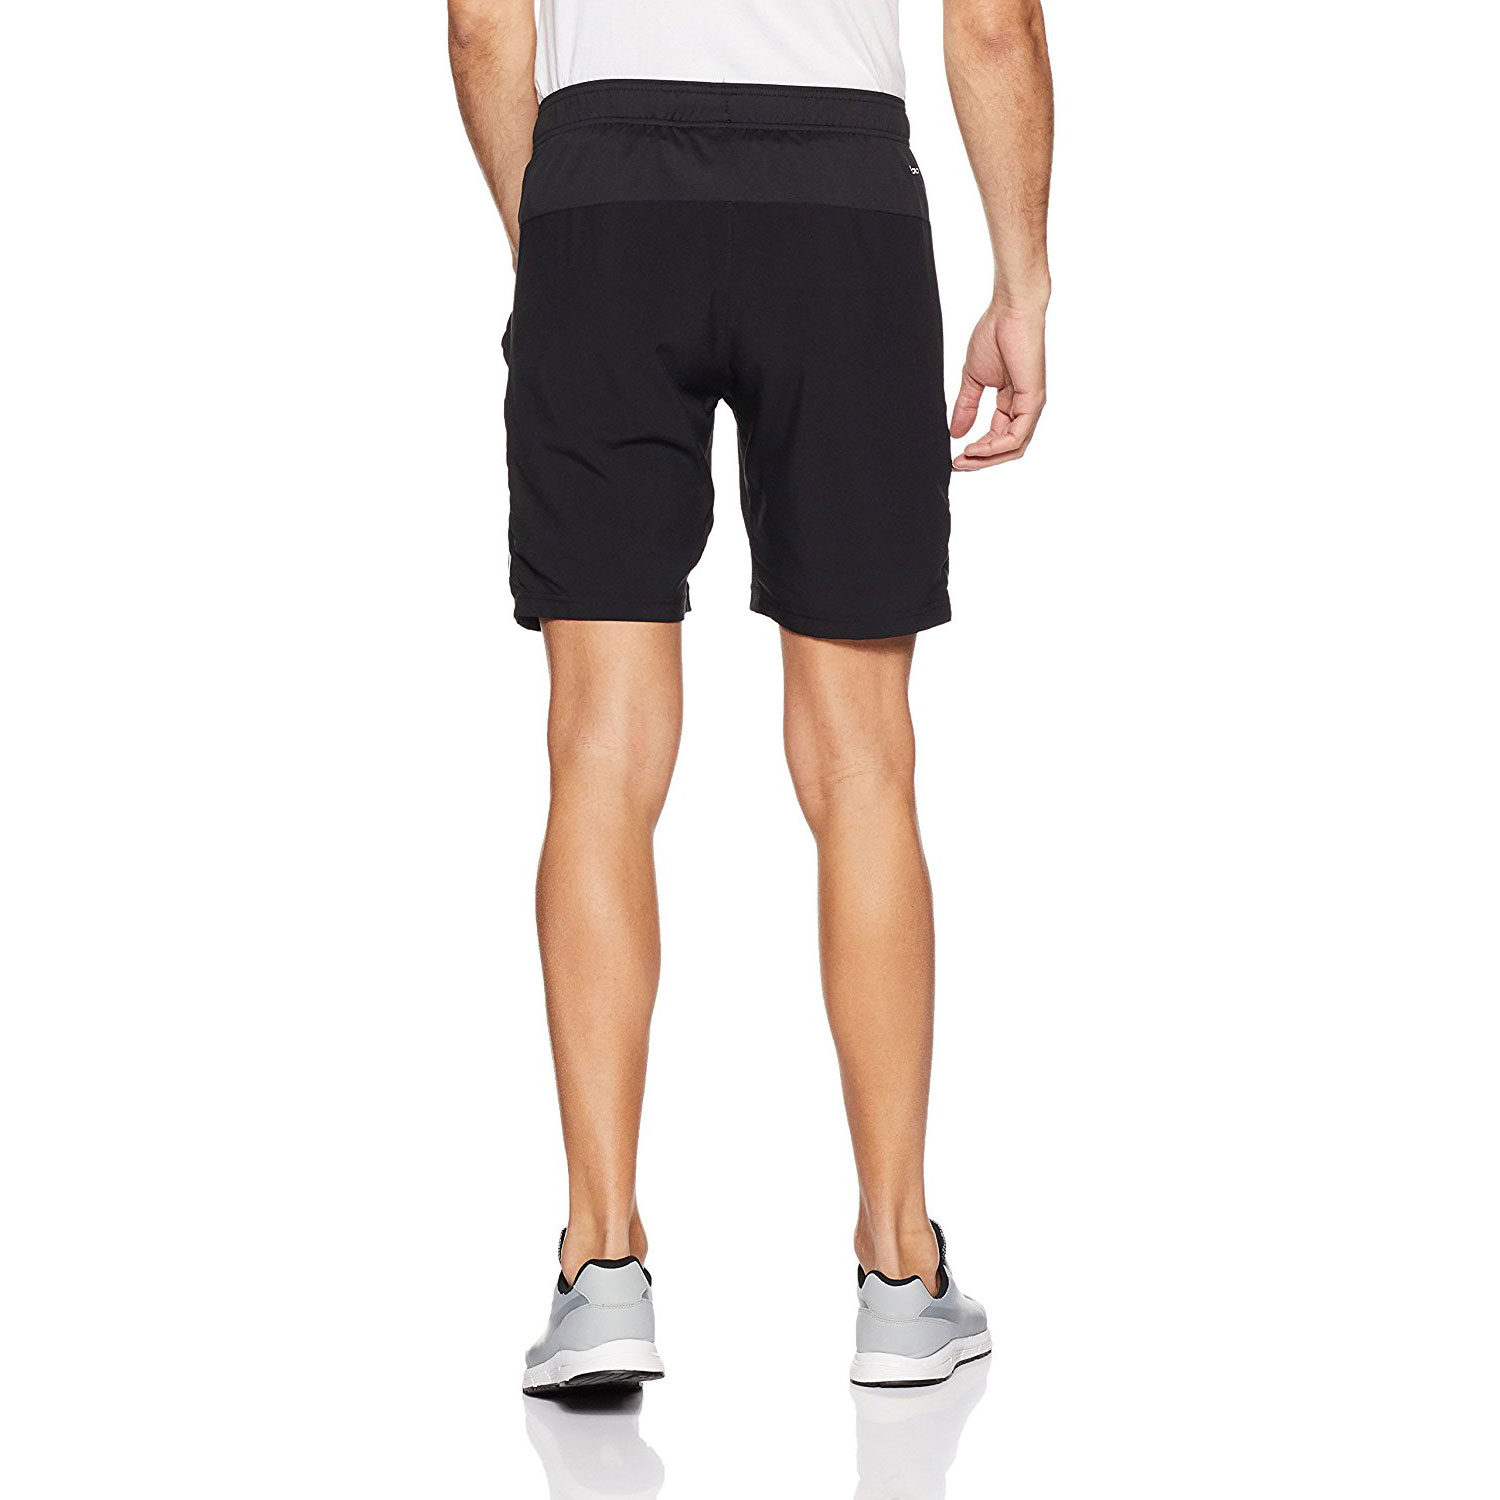  Adidas Men's Cropped Shorts